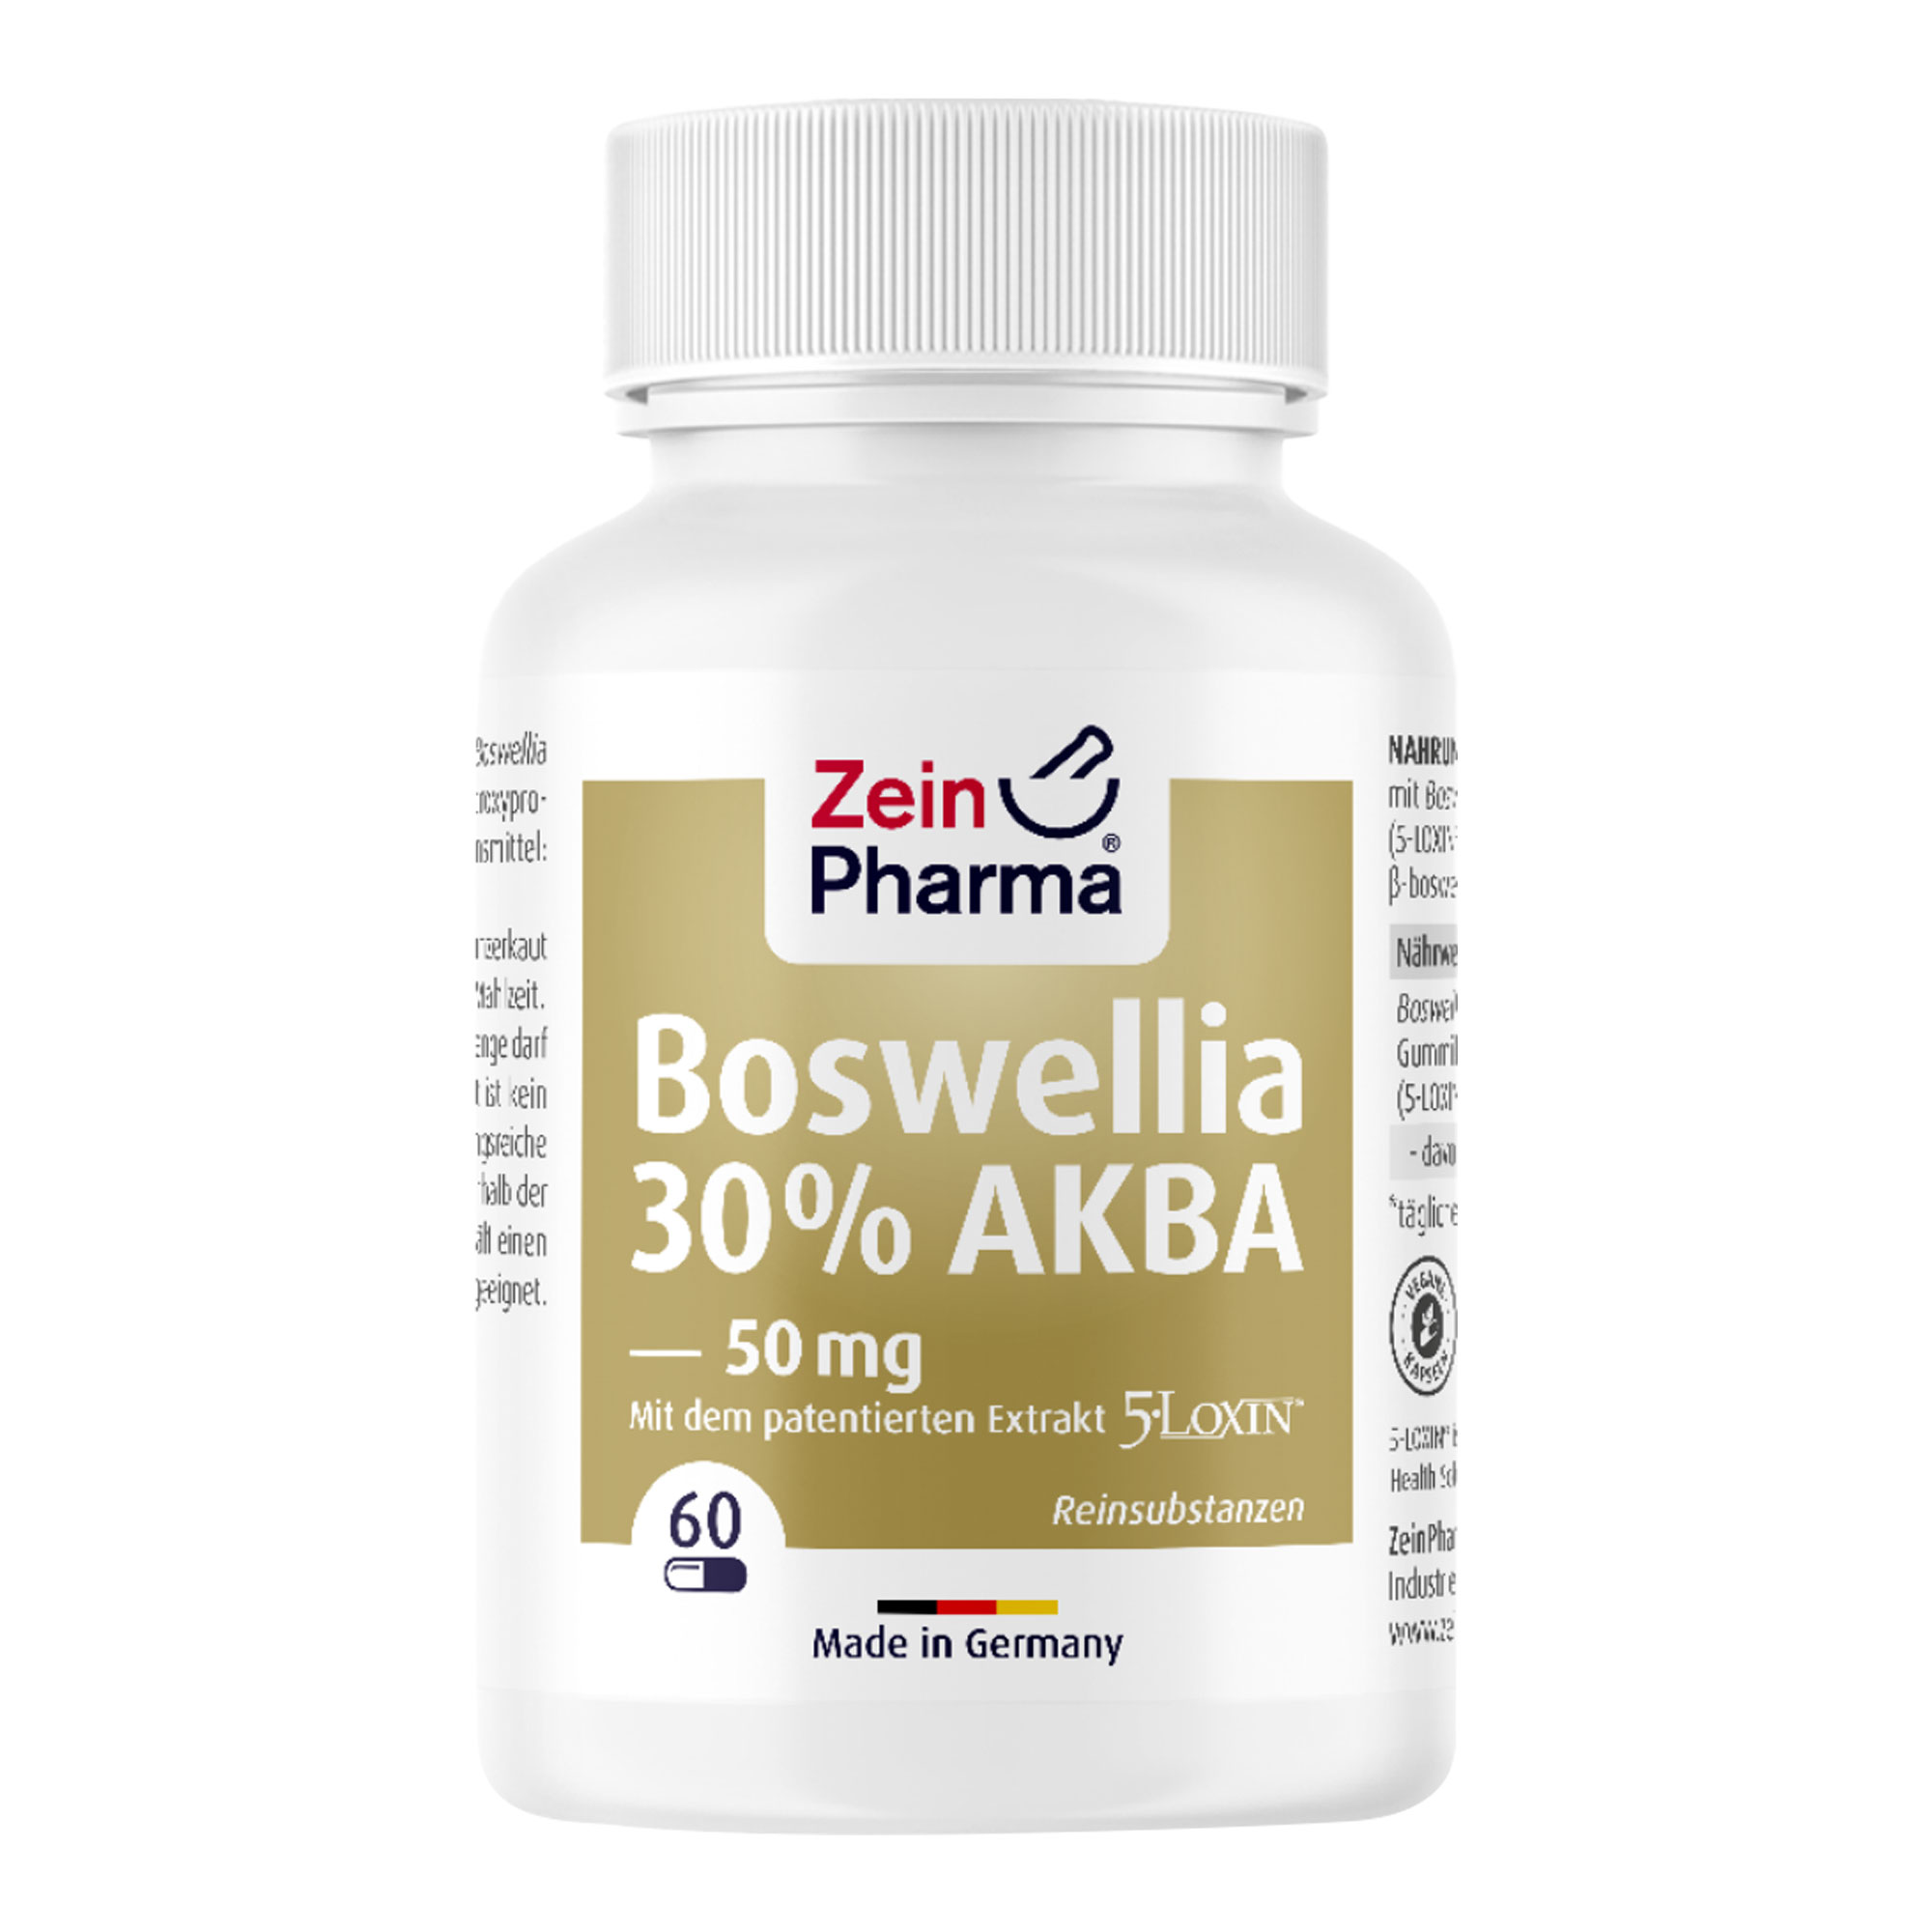 Nahrungsergänzungsmittel mit Boswellia serrata Gummiharz Extrakt mit 30% AKBA in veganen Kapseln.